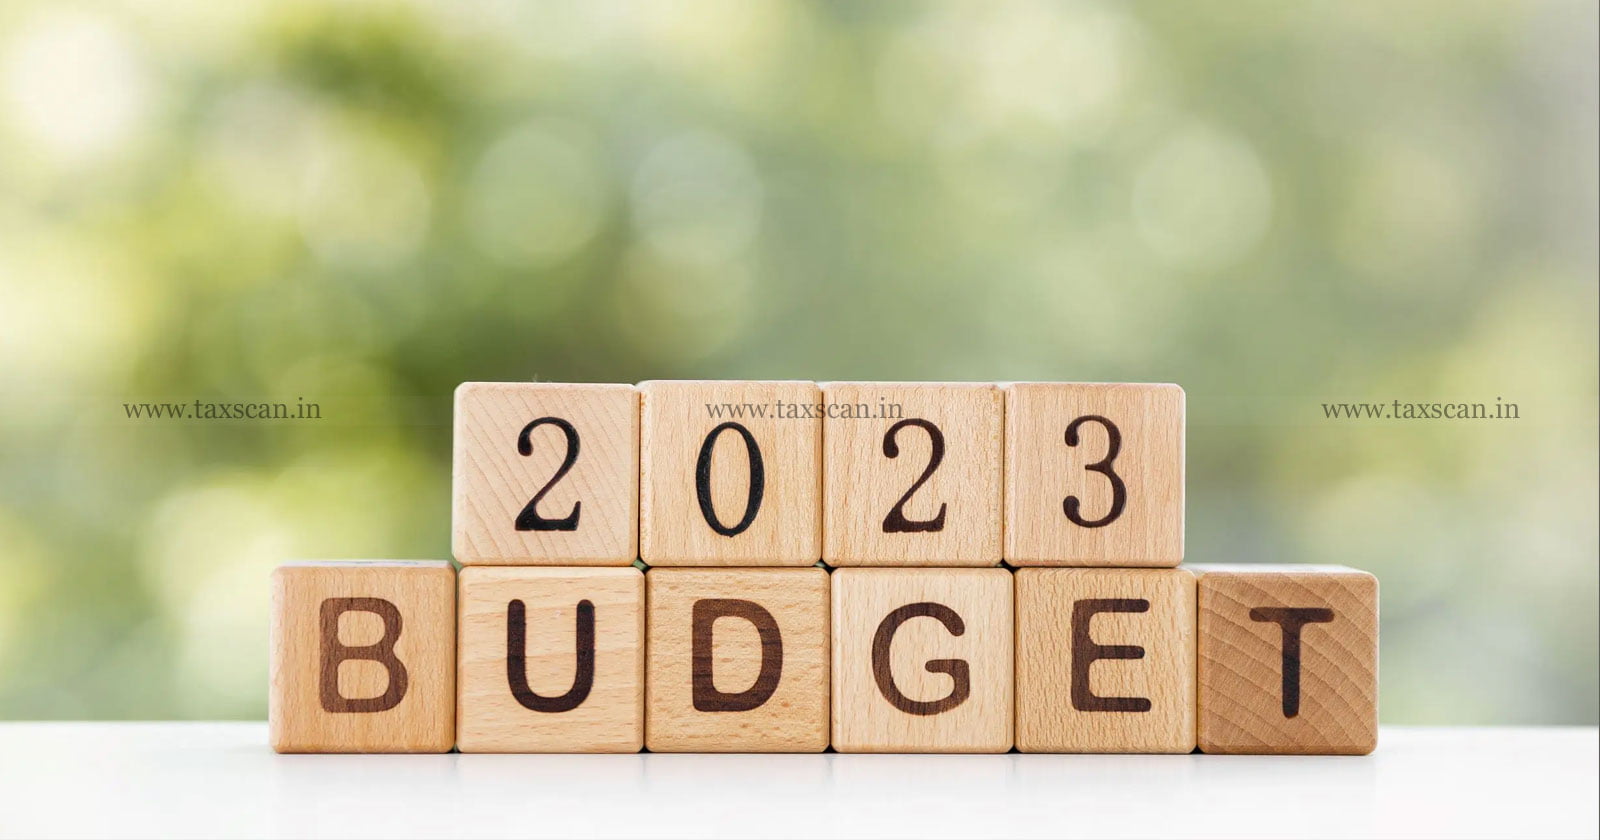 Budget 2023 - Budget - budget 2023 live - union budget 2023 - nirmala sitharaman budget - nirmala sitharaman union budget - nirmala sitharaman - budget 2023 india - union budget 2023 live - budget of india 2023 - budget 2023 - Taxscan